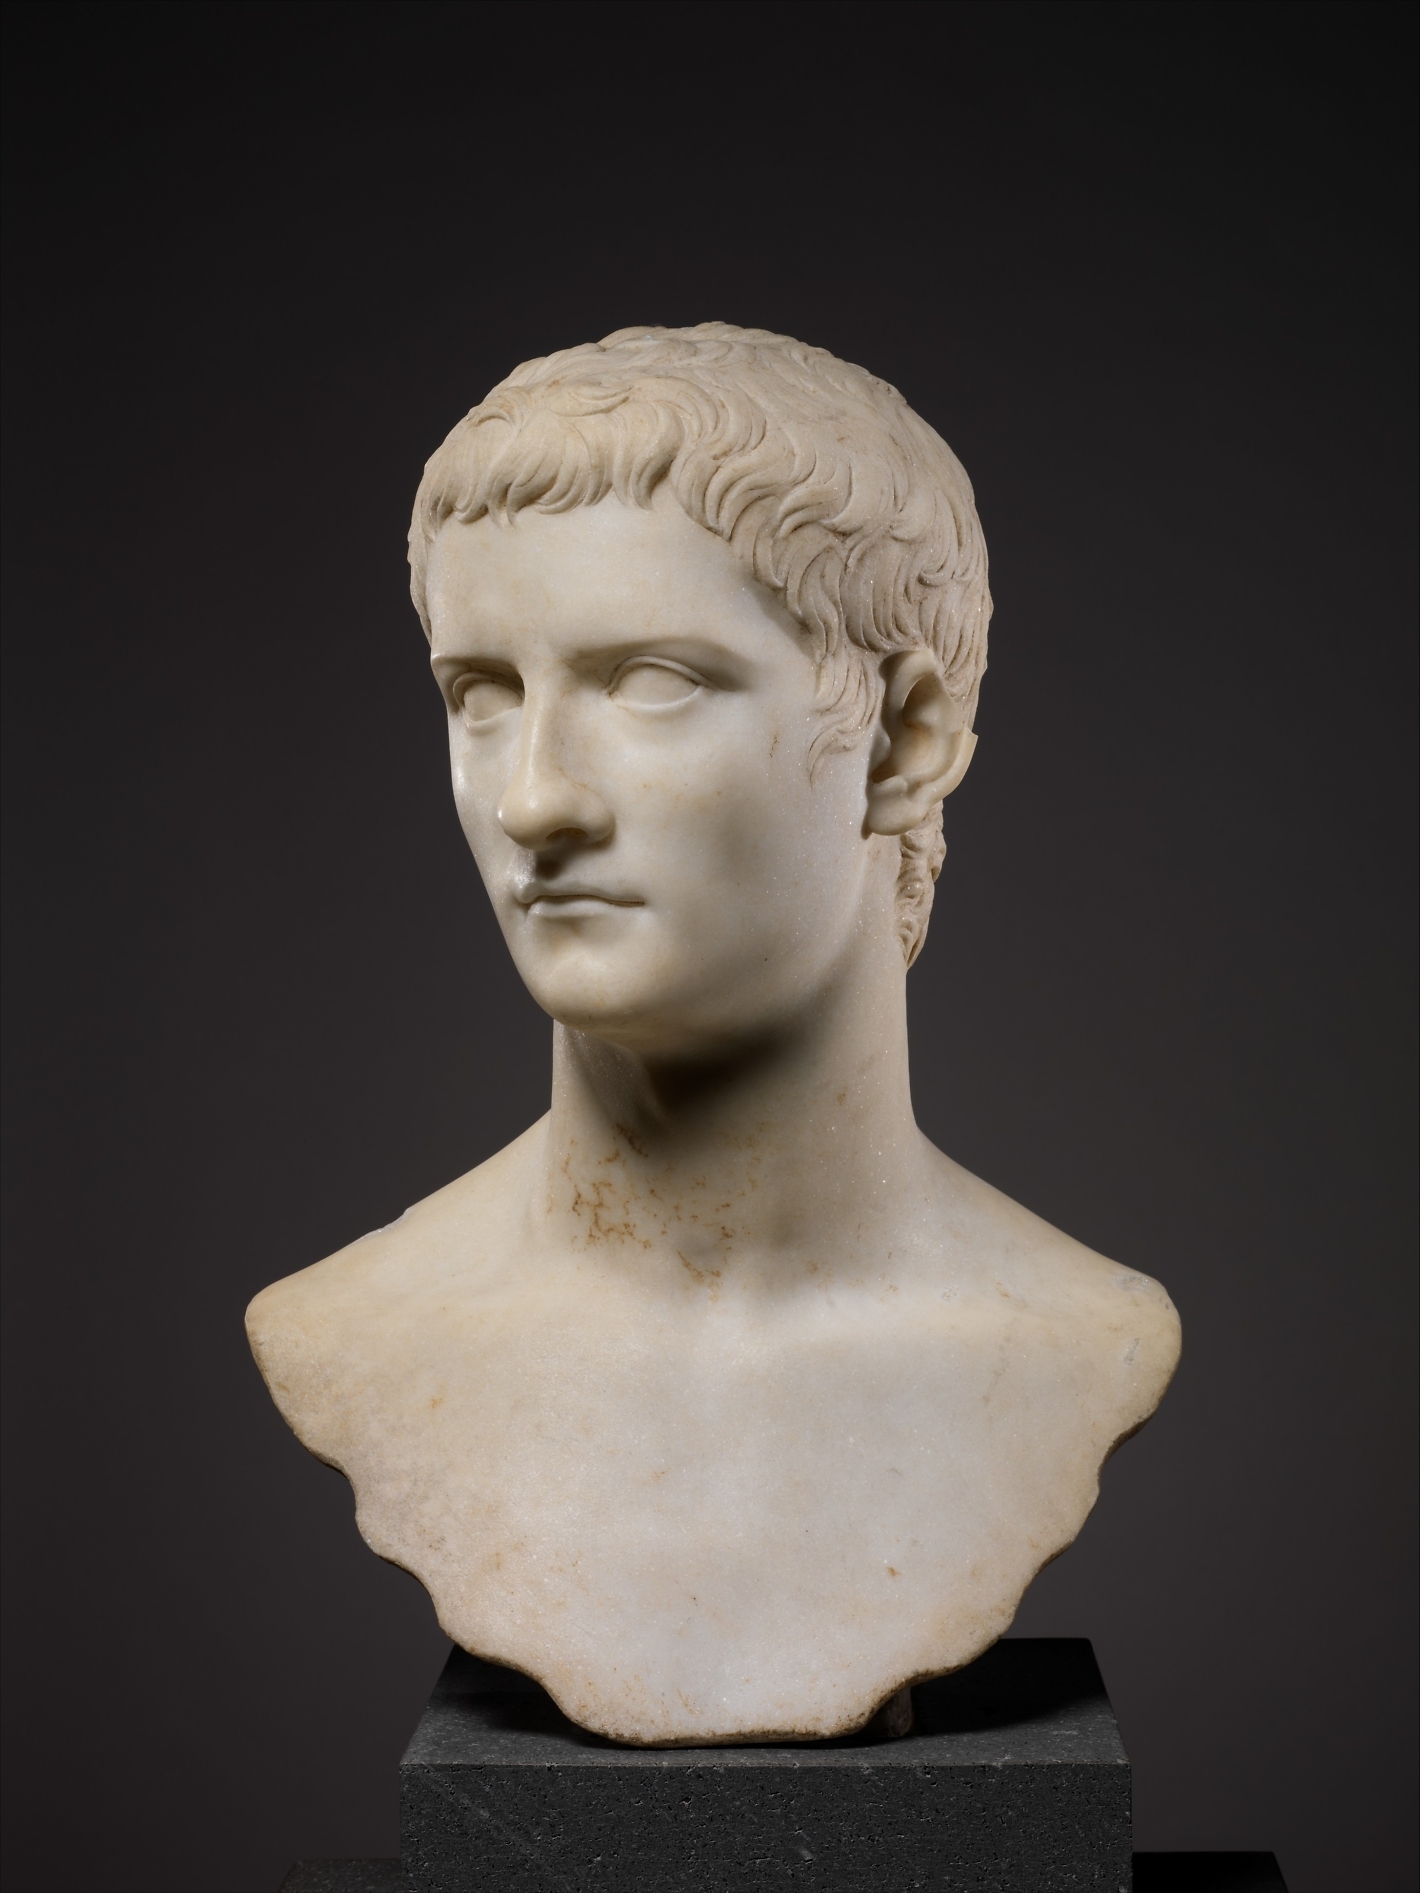 Marmorporträtbüste des Kaisers Gaius, genannt Caligula